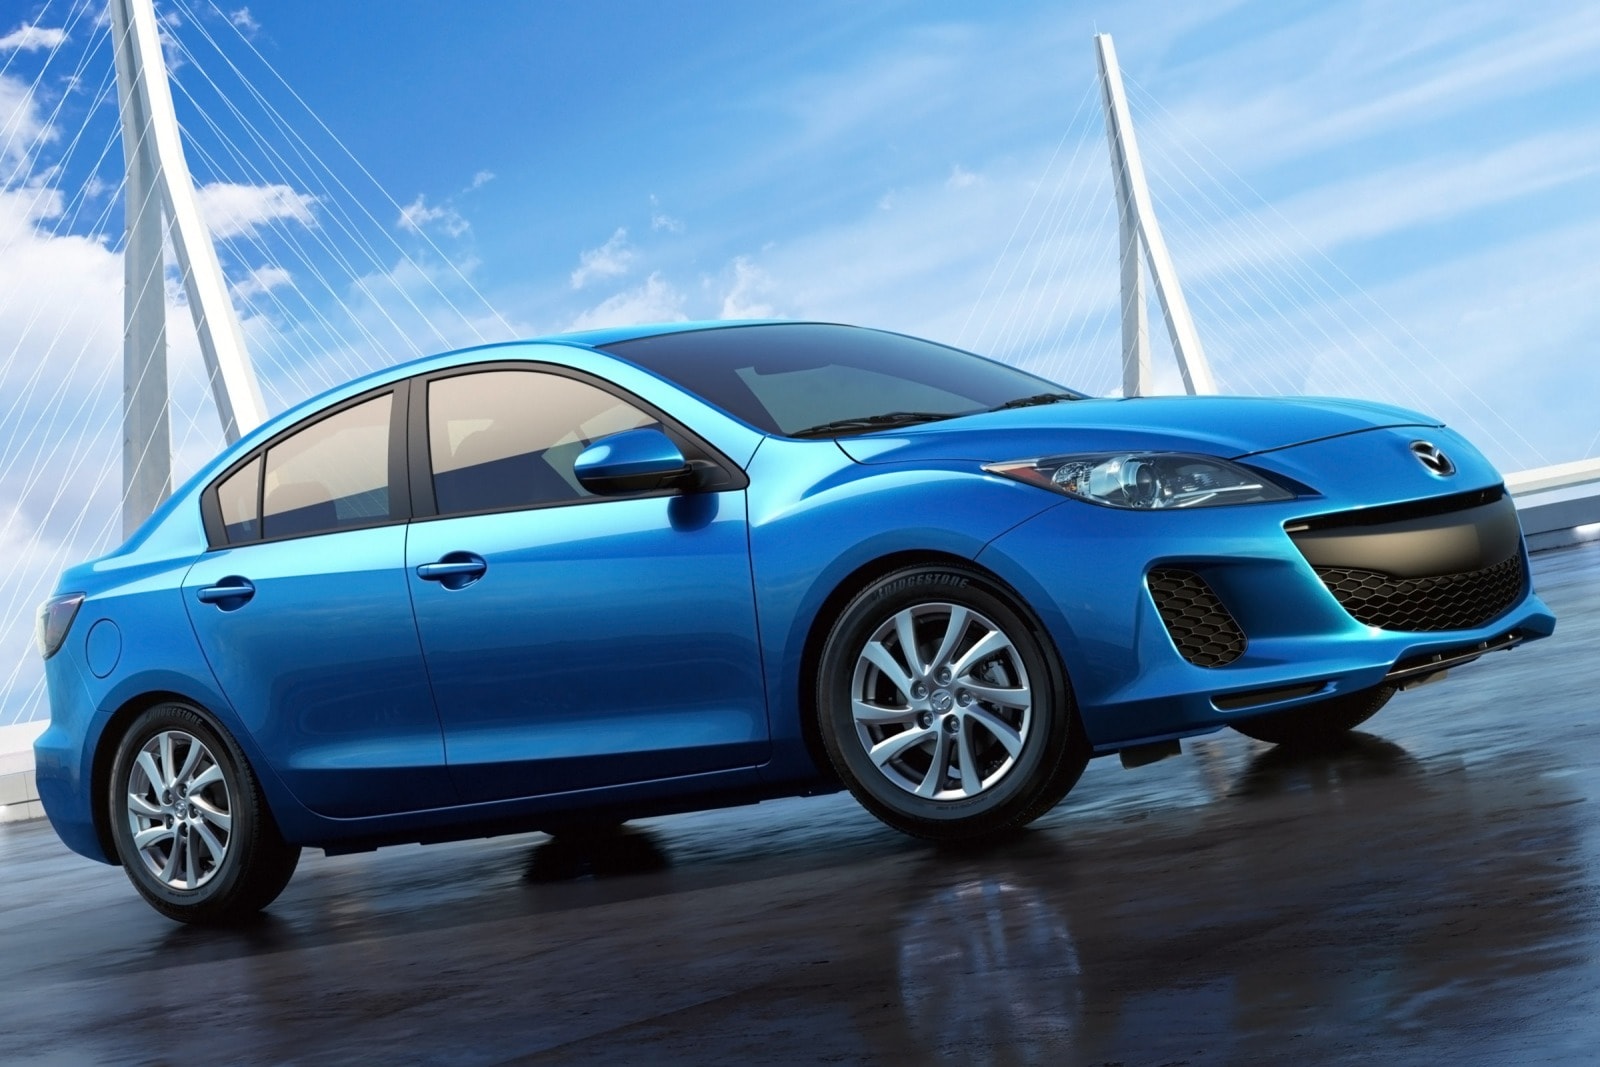 2012 Mazda 3 Review & Ratings | Edmunds